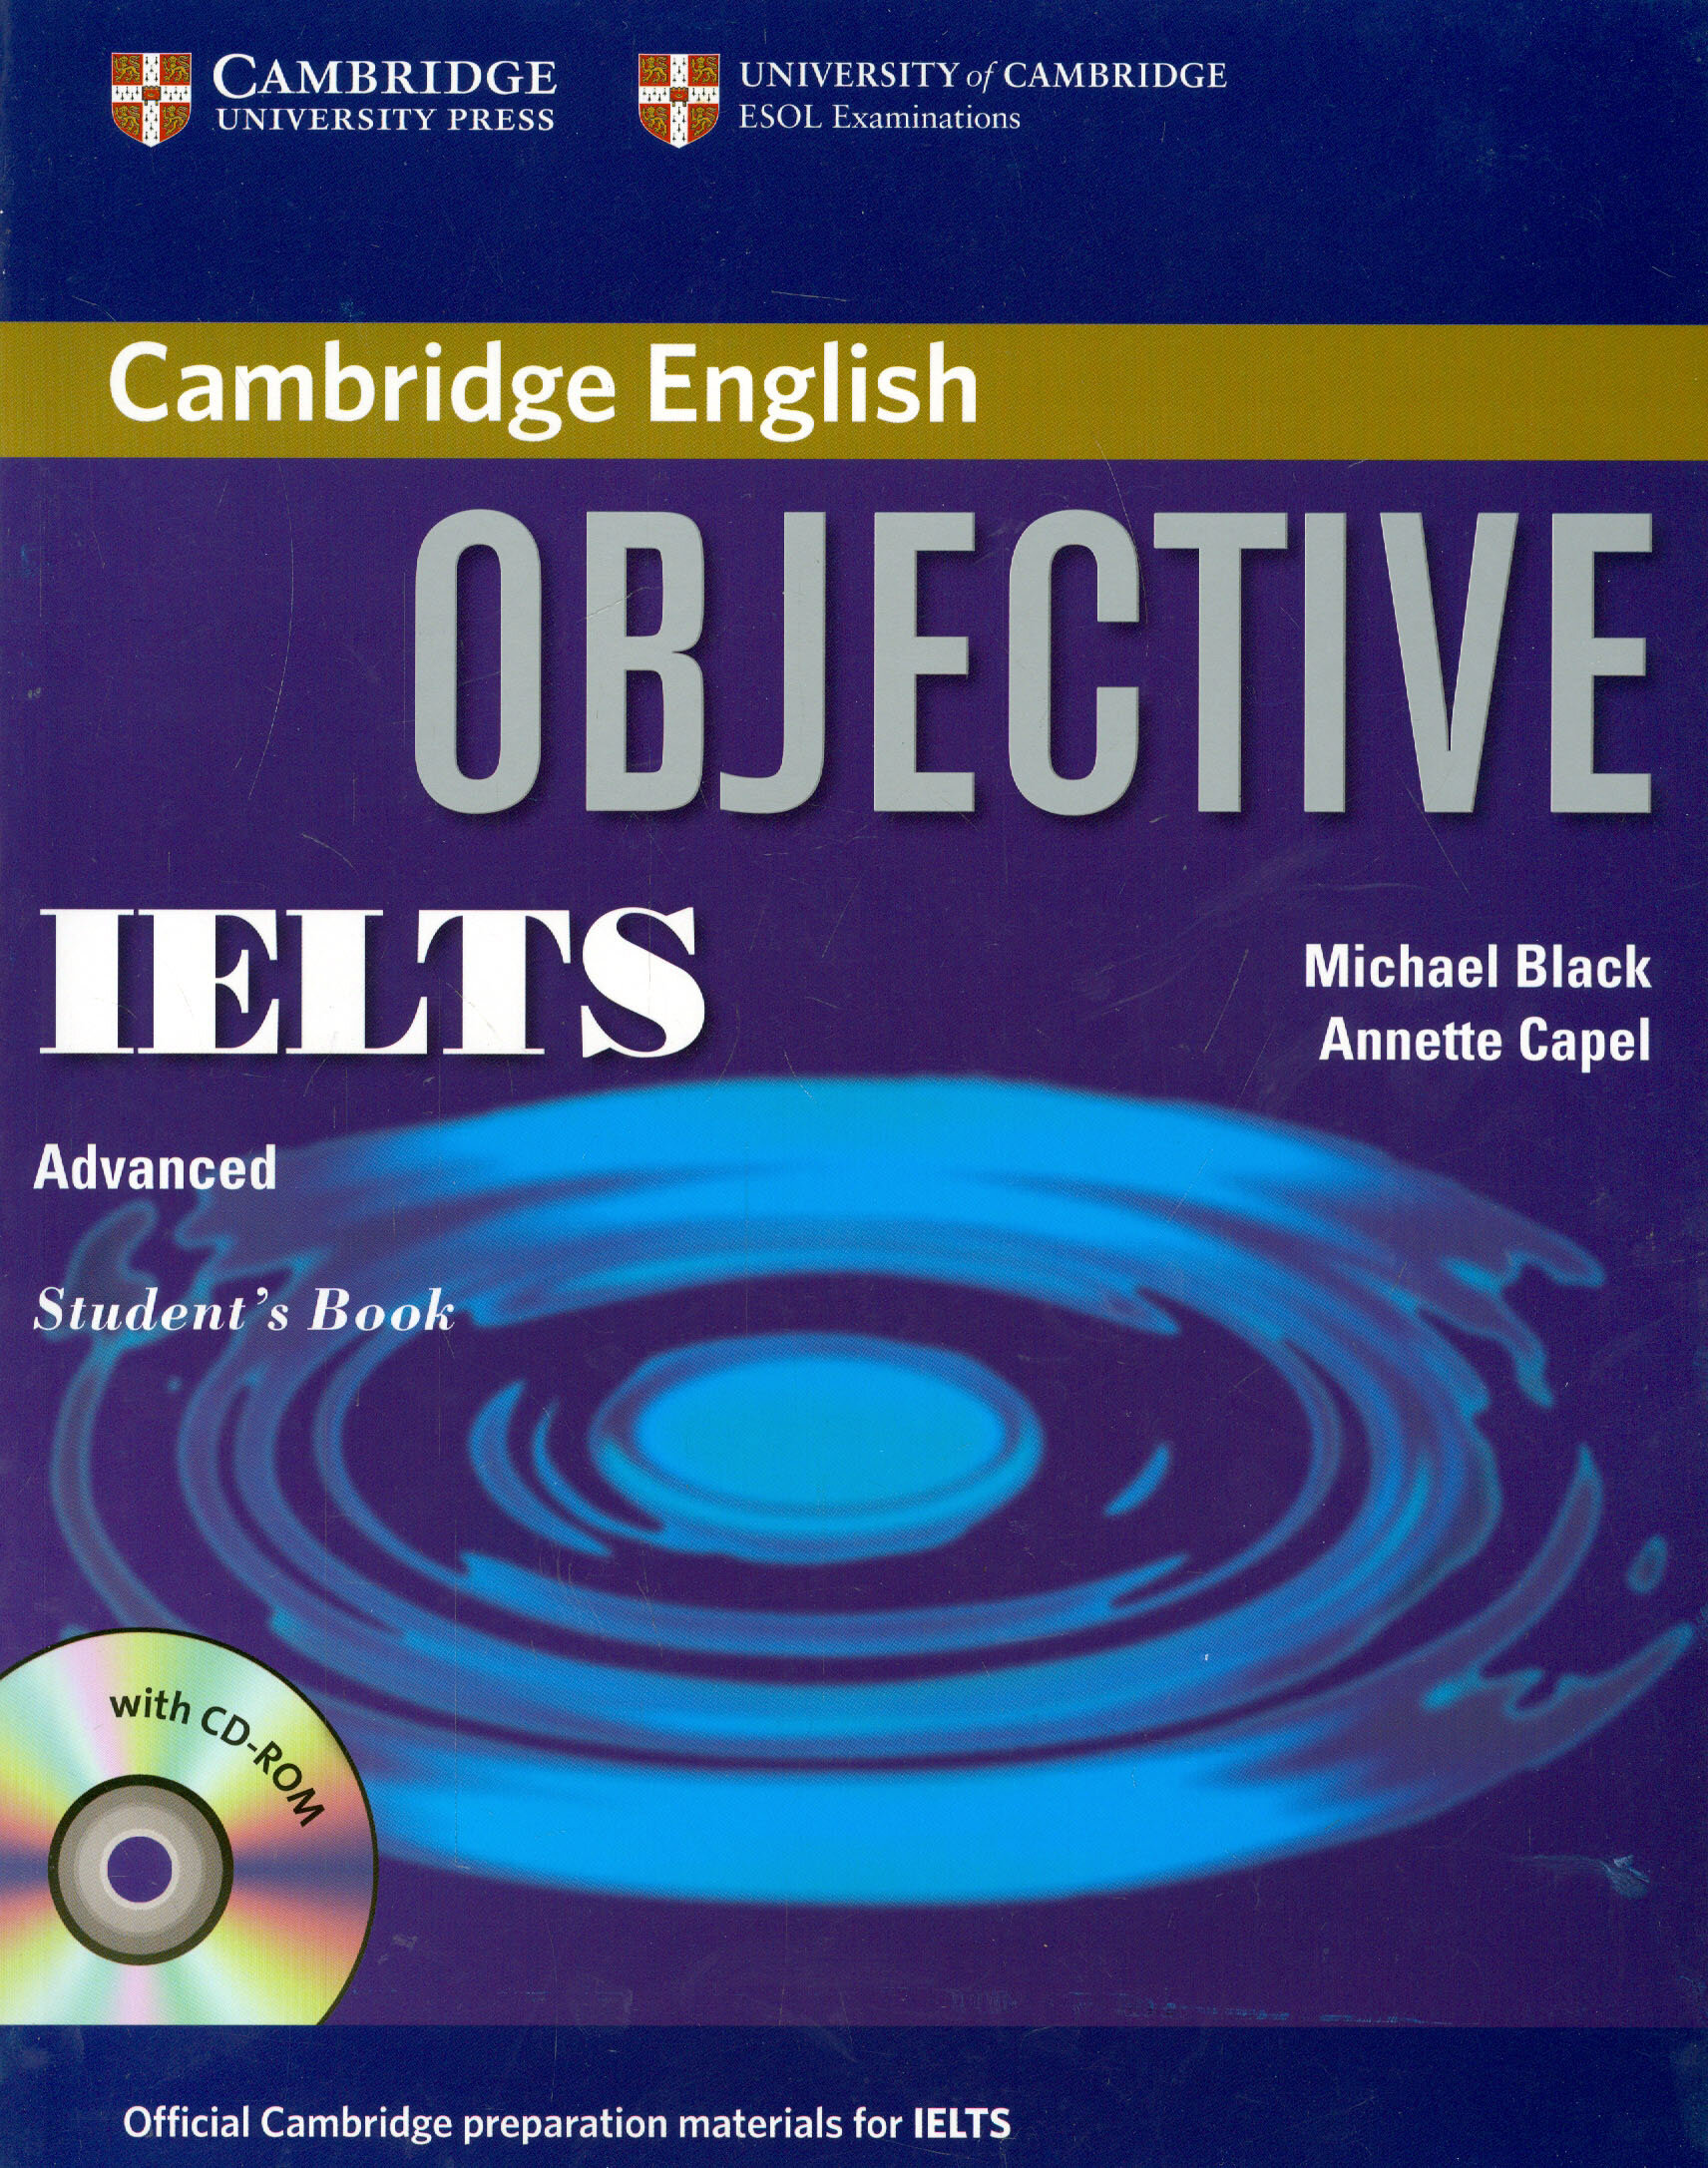 Annette Capel, Michael Black "Objective IELTS Advanced Student's Book + CD"